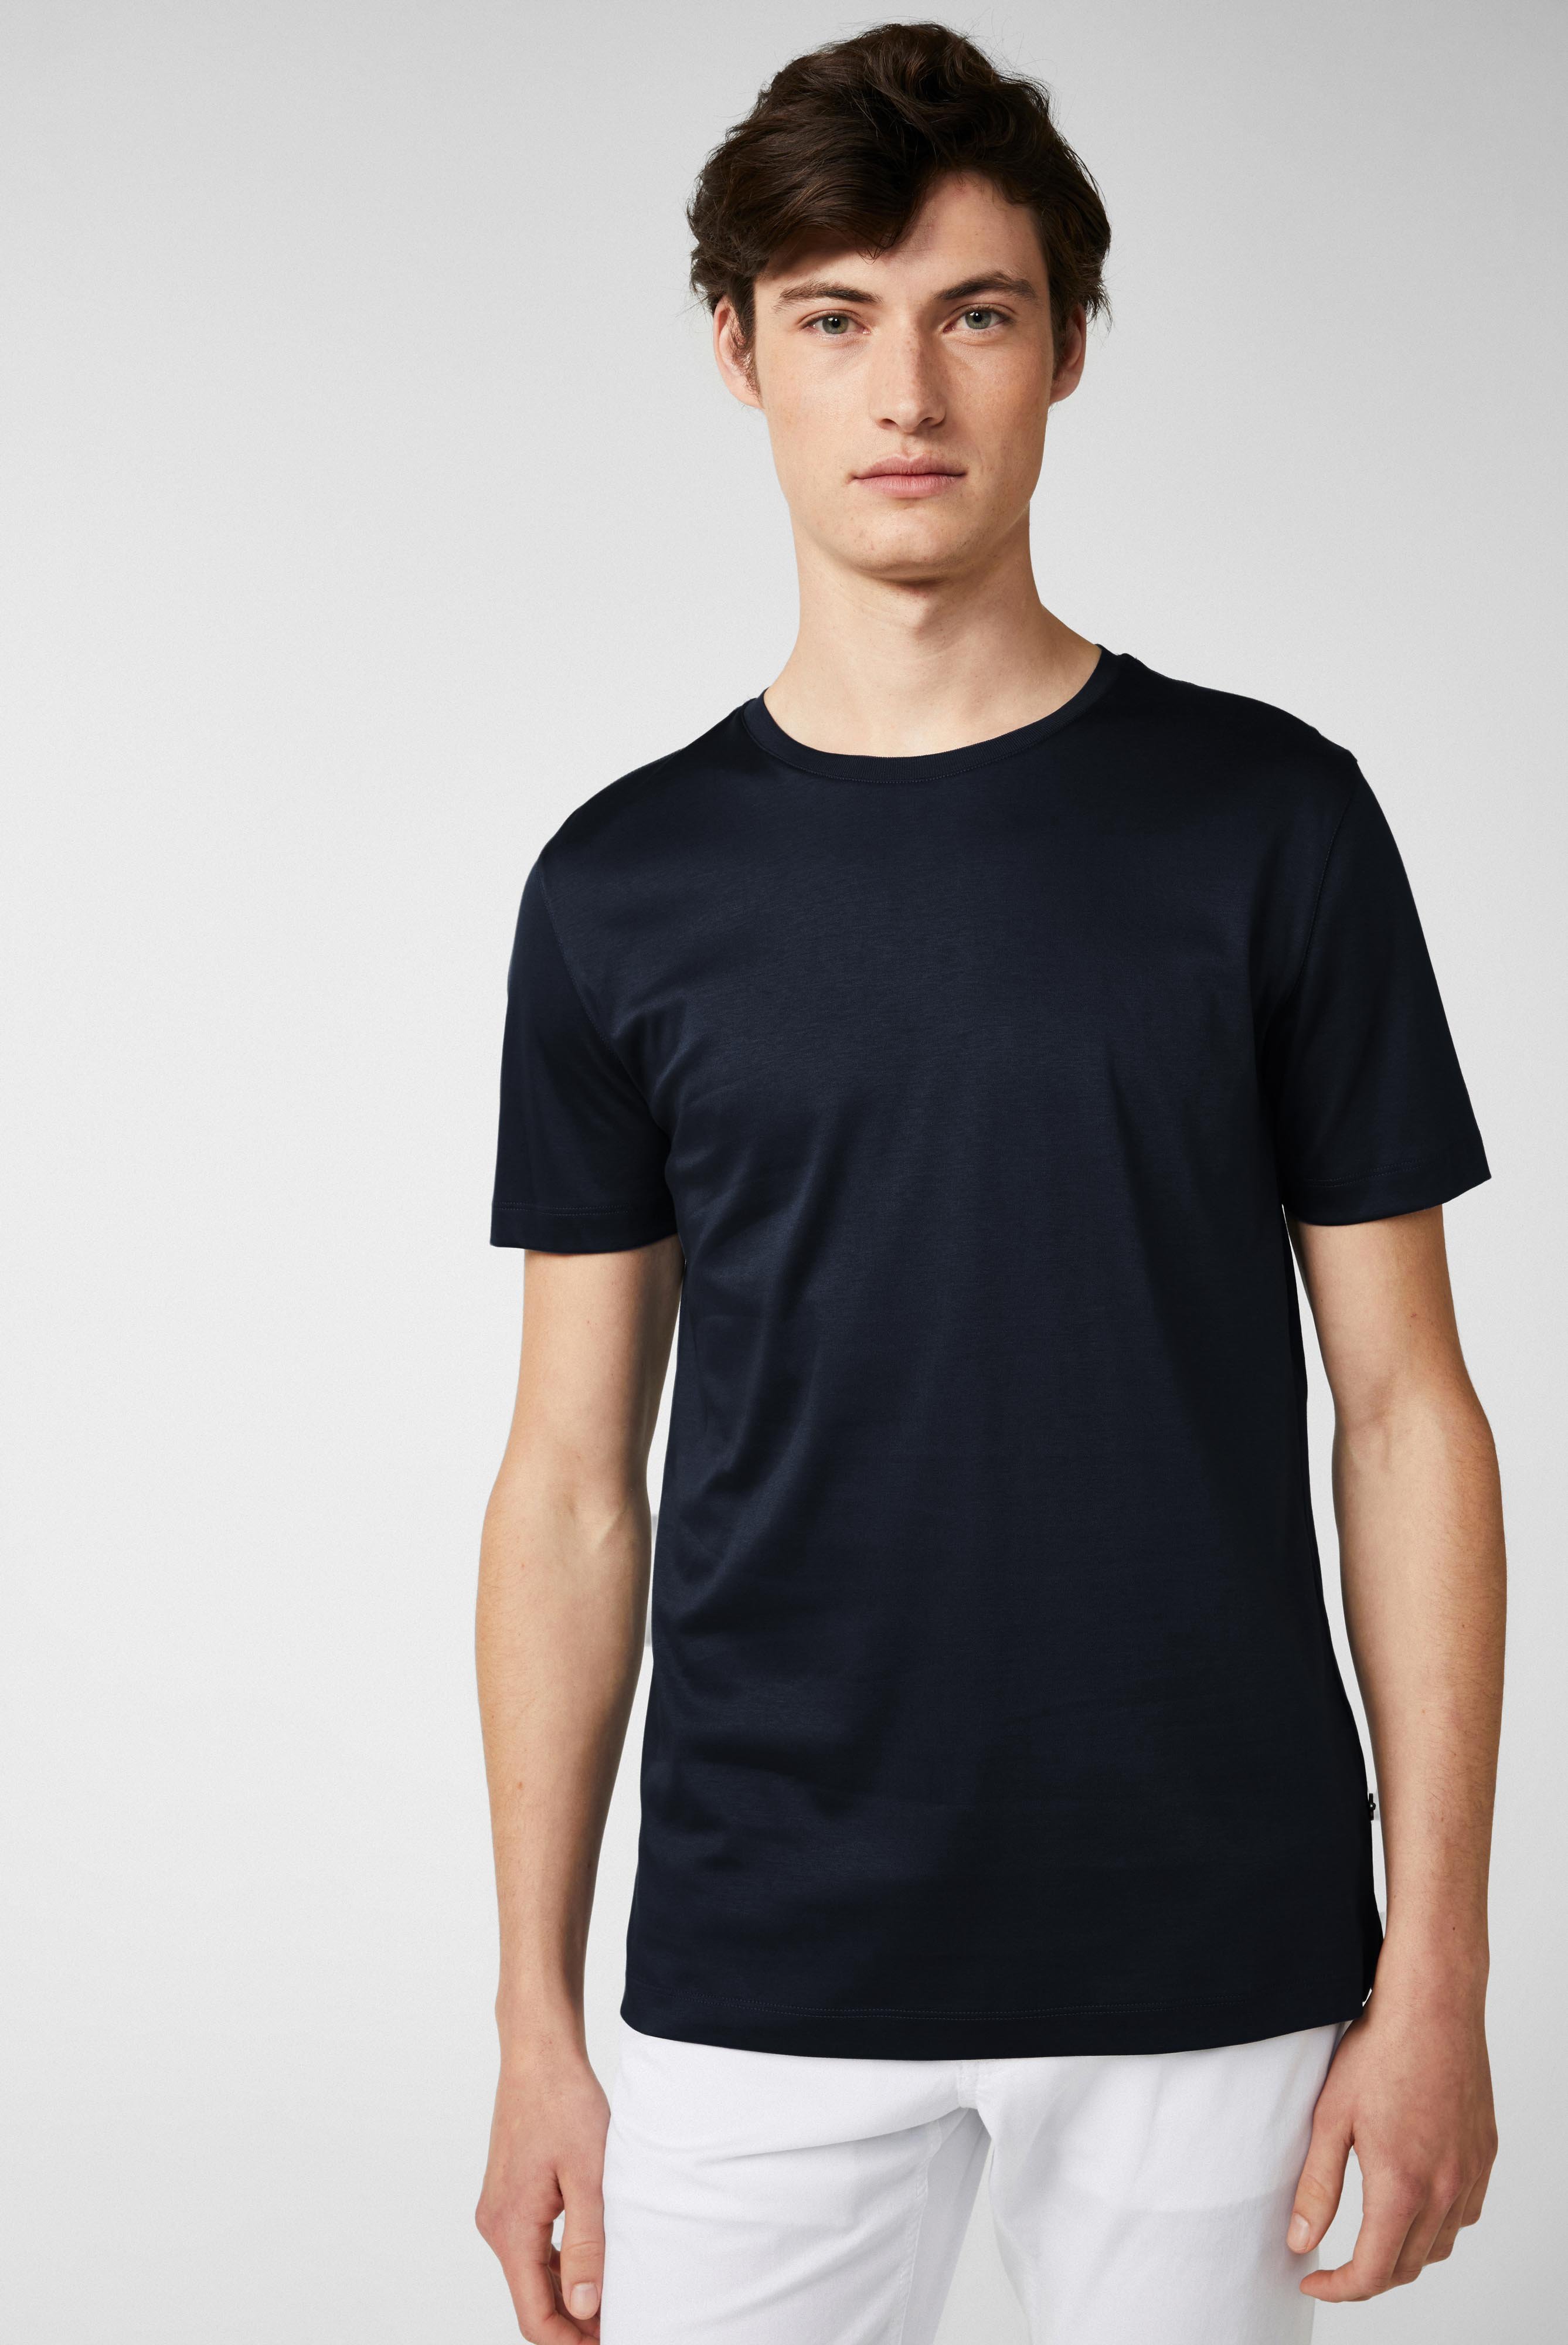 T-Shirts+Swiss Cotton Jersey Crew Neck T-Shirt+20.1717.UX.180031.790.S